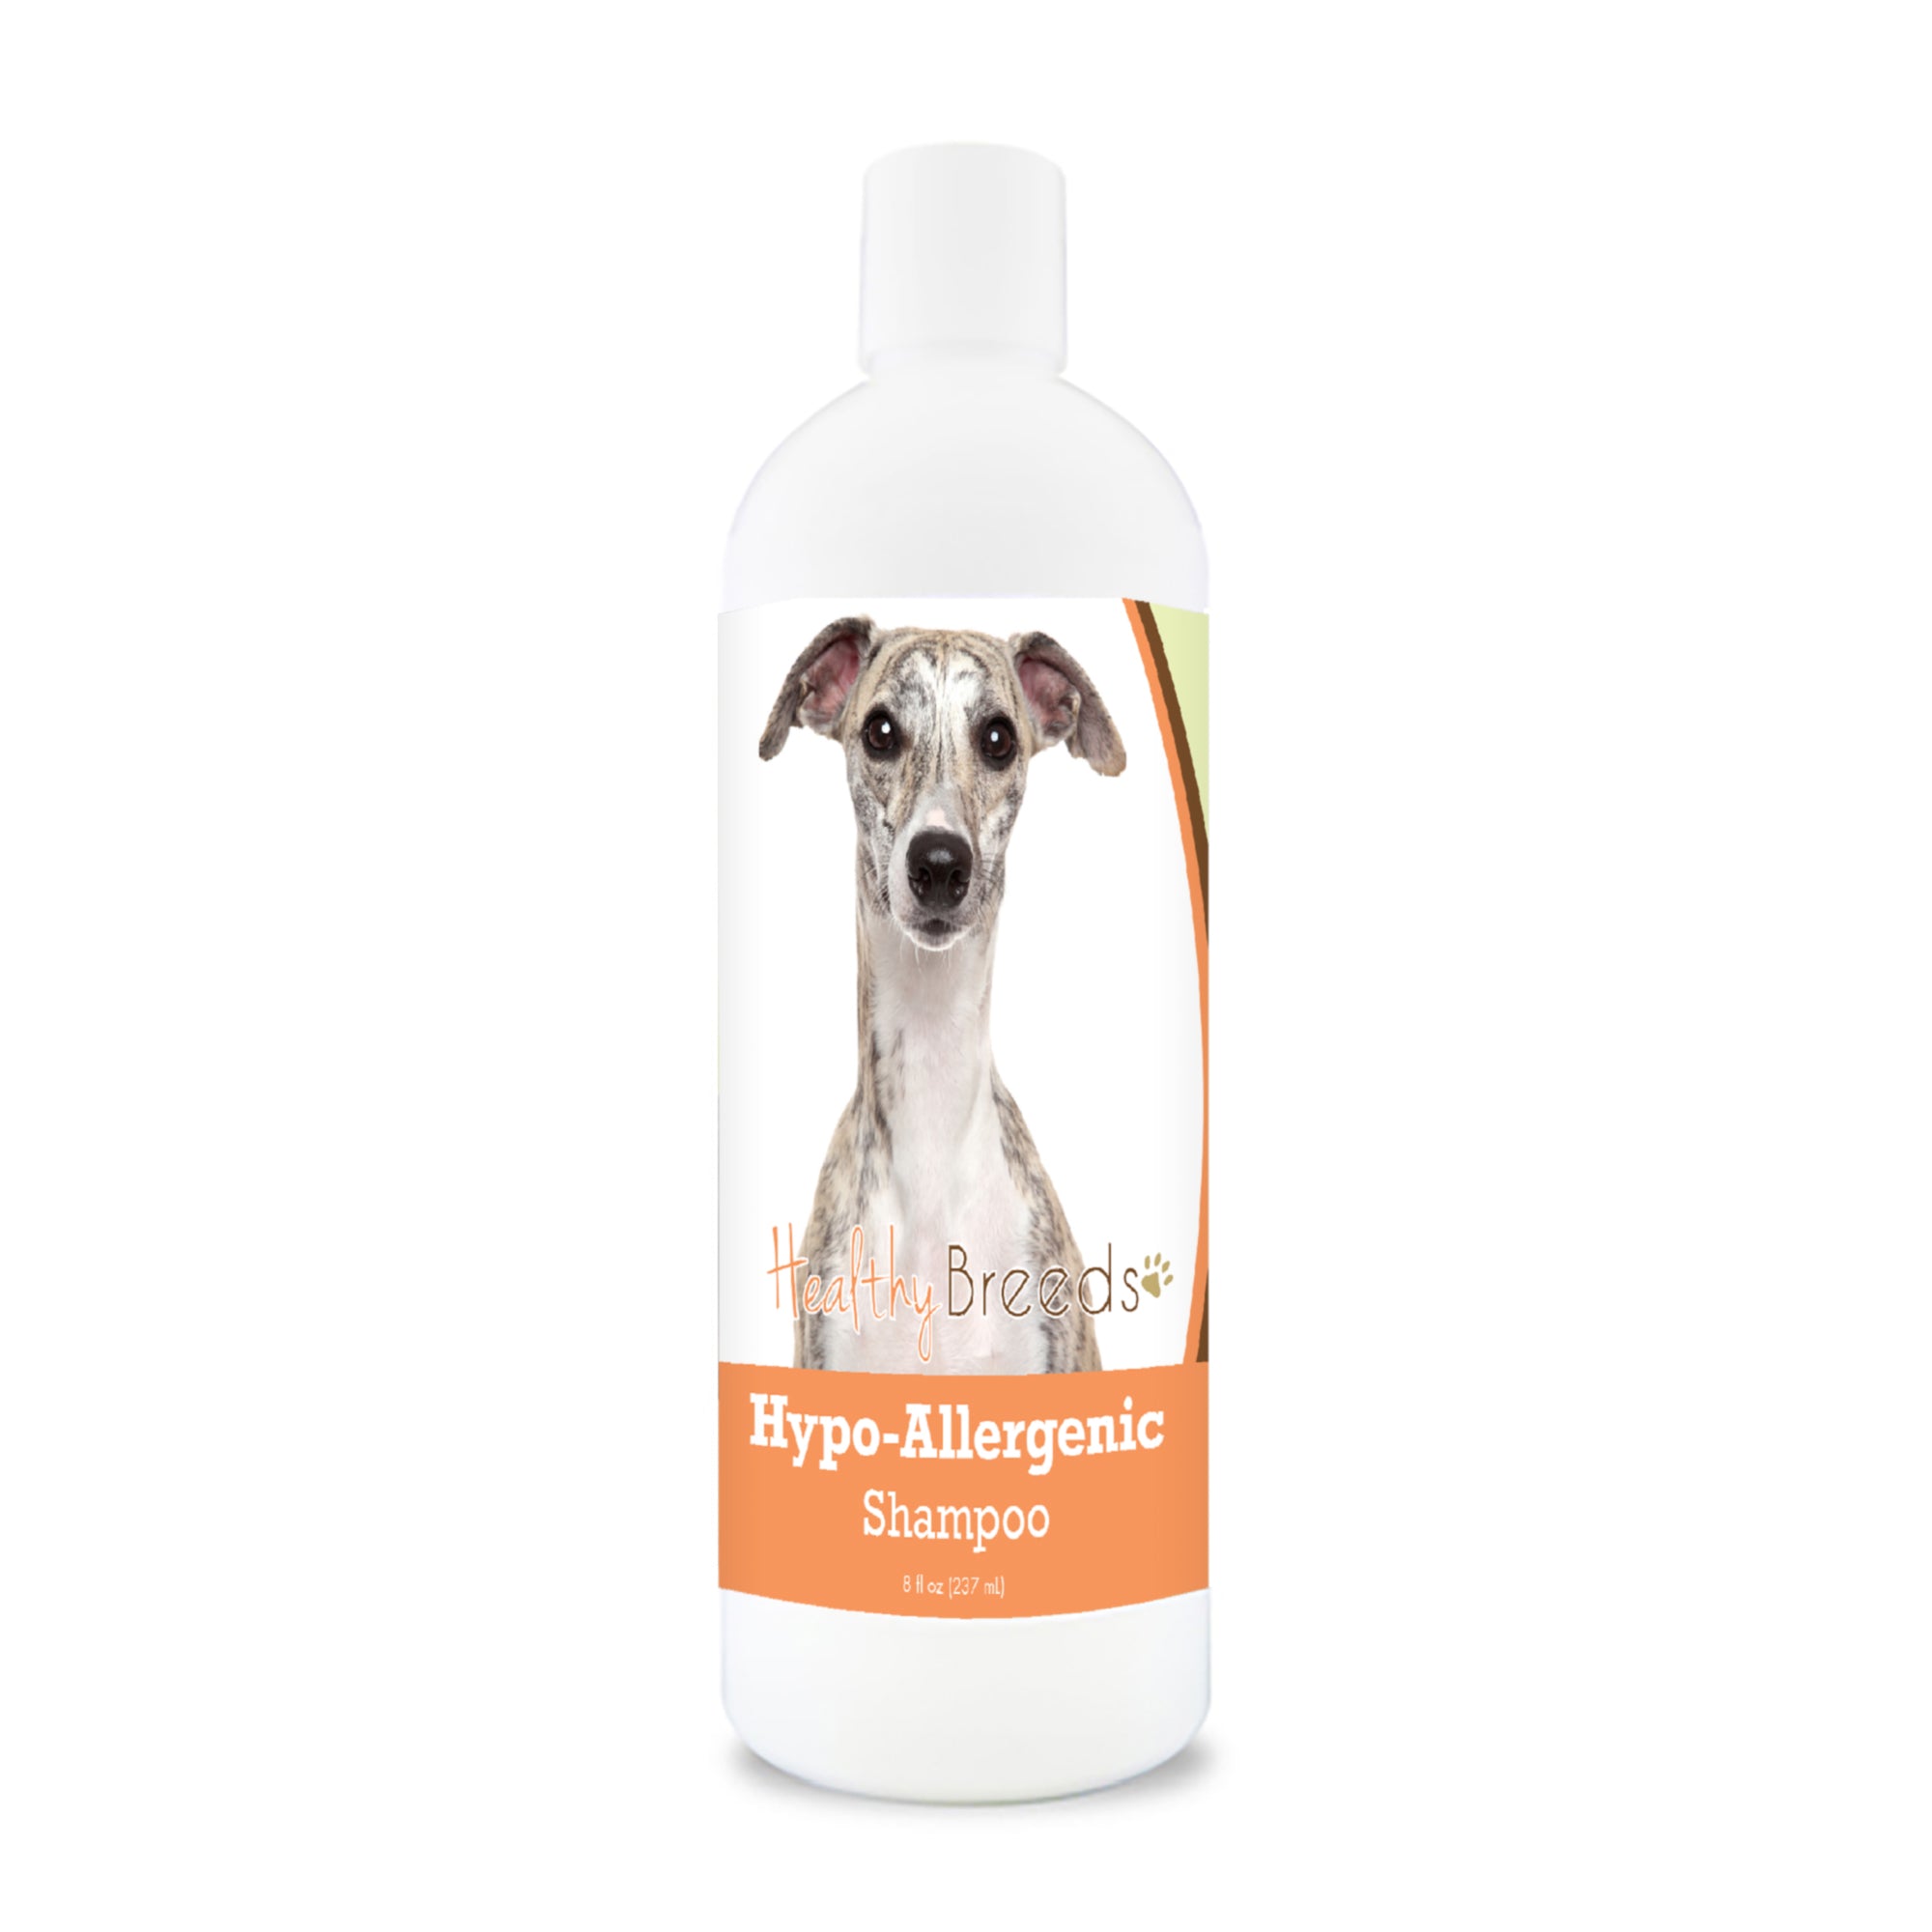 Whippet Hypo-Allergenic Shampoo 8 oz